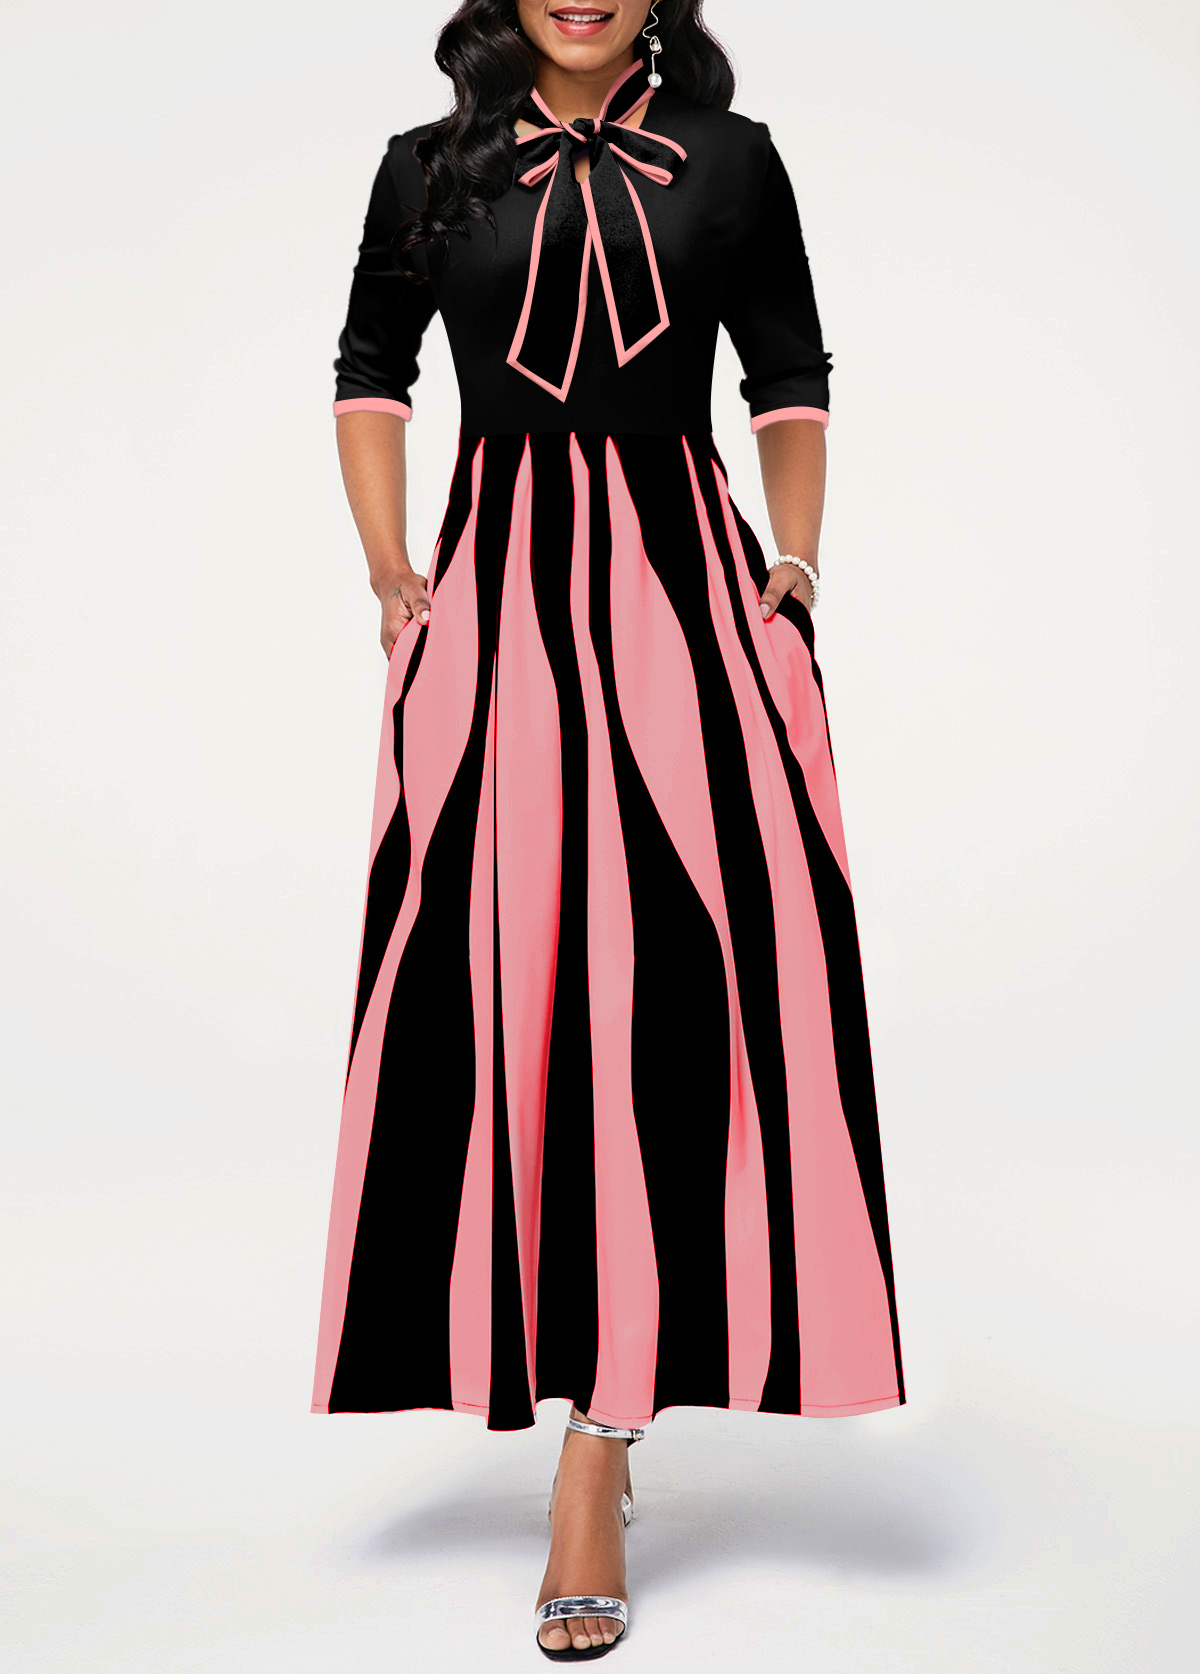 Geometric Print 3/4 Sleeve Pink Pocket Dress